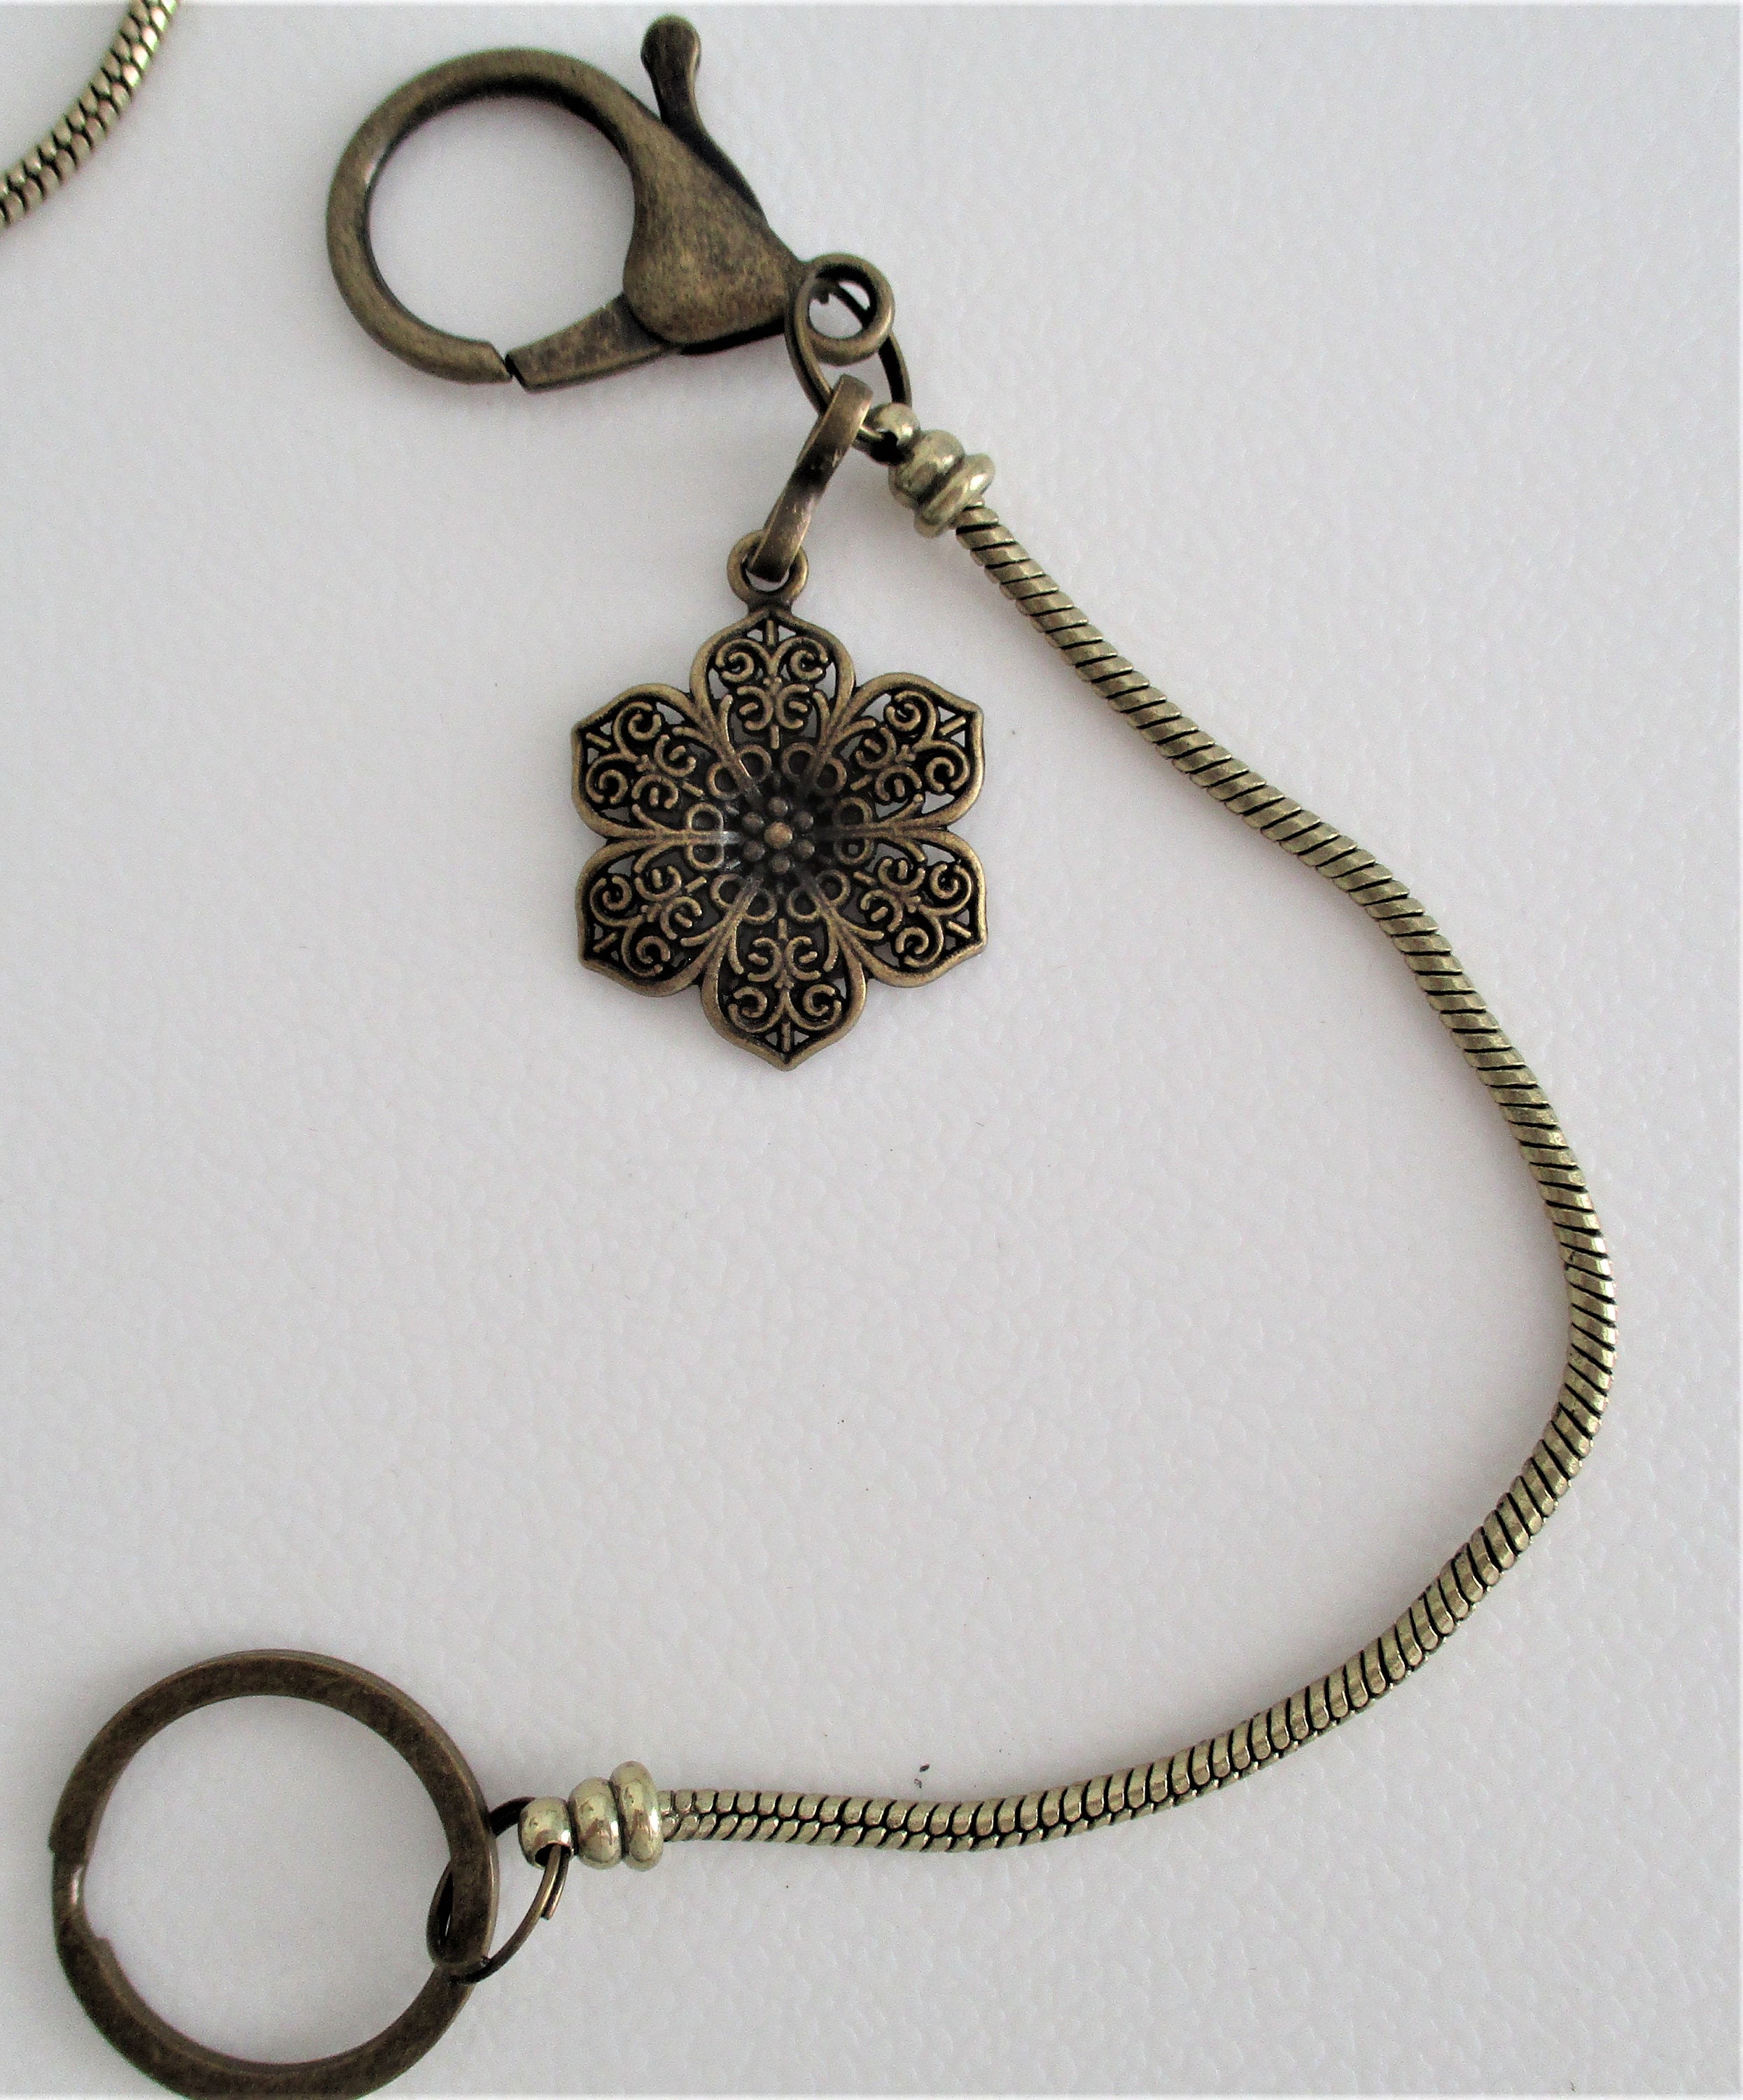 Key Finder Keychain Hook Holder Hangs Keys in Purse Handbag Blue Butterfly  Blue Flower Find Keys Quickly Charm Key Chain Hanger Gift Ladies 